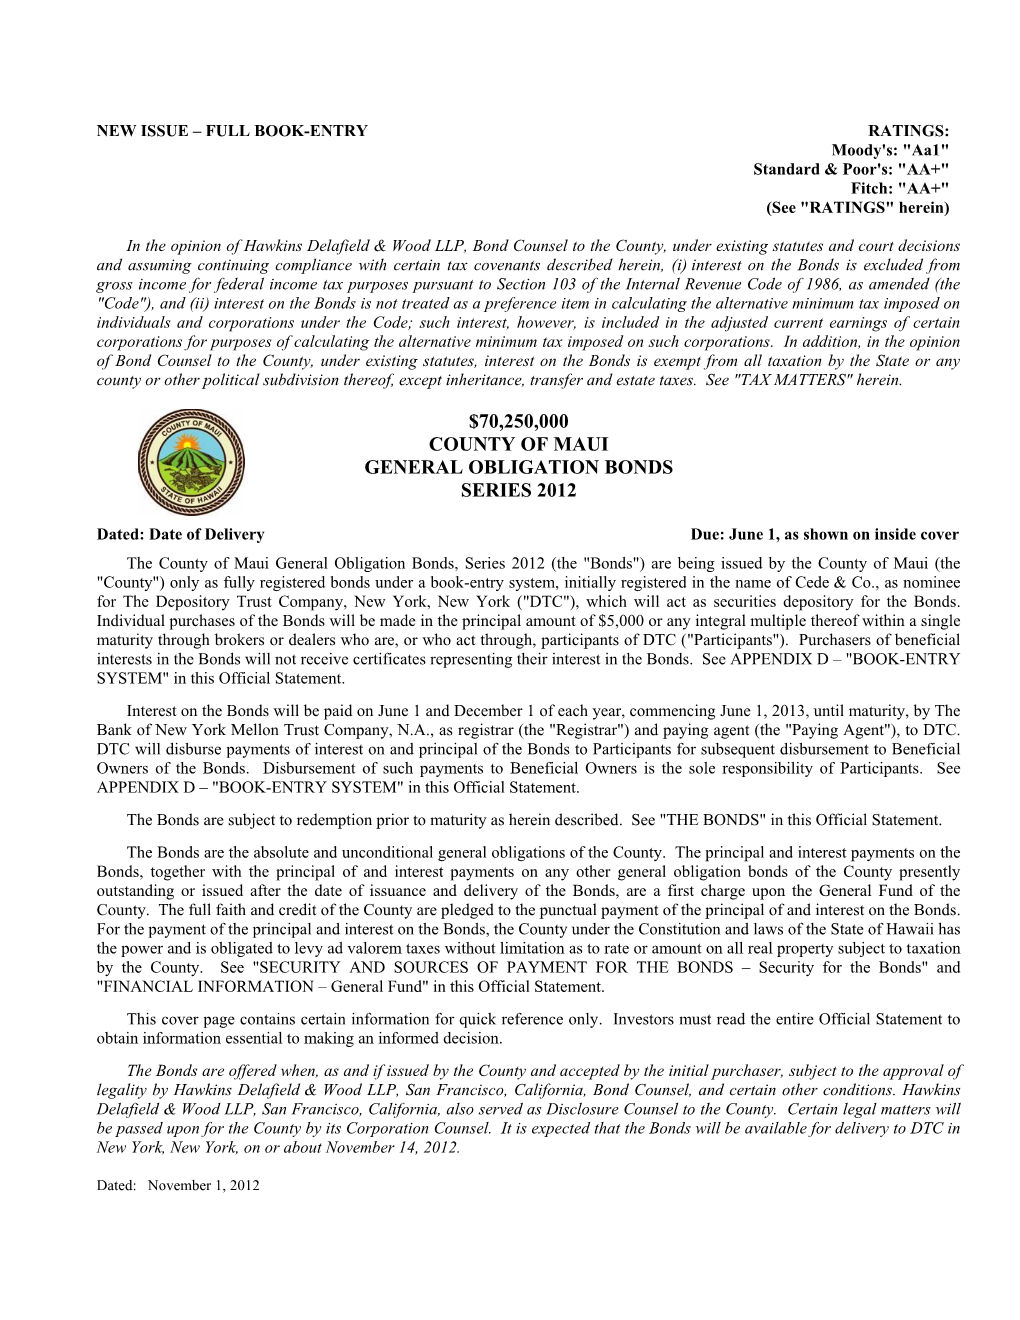 $70,250,000 County of Maui General Obligation Bonds Series 2012